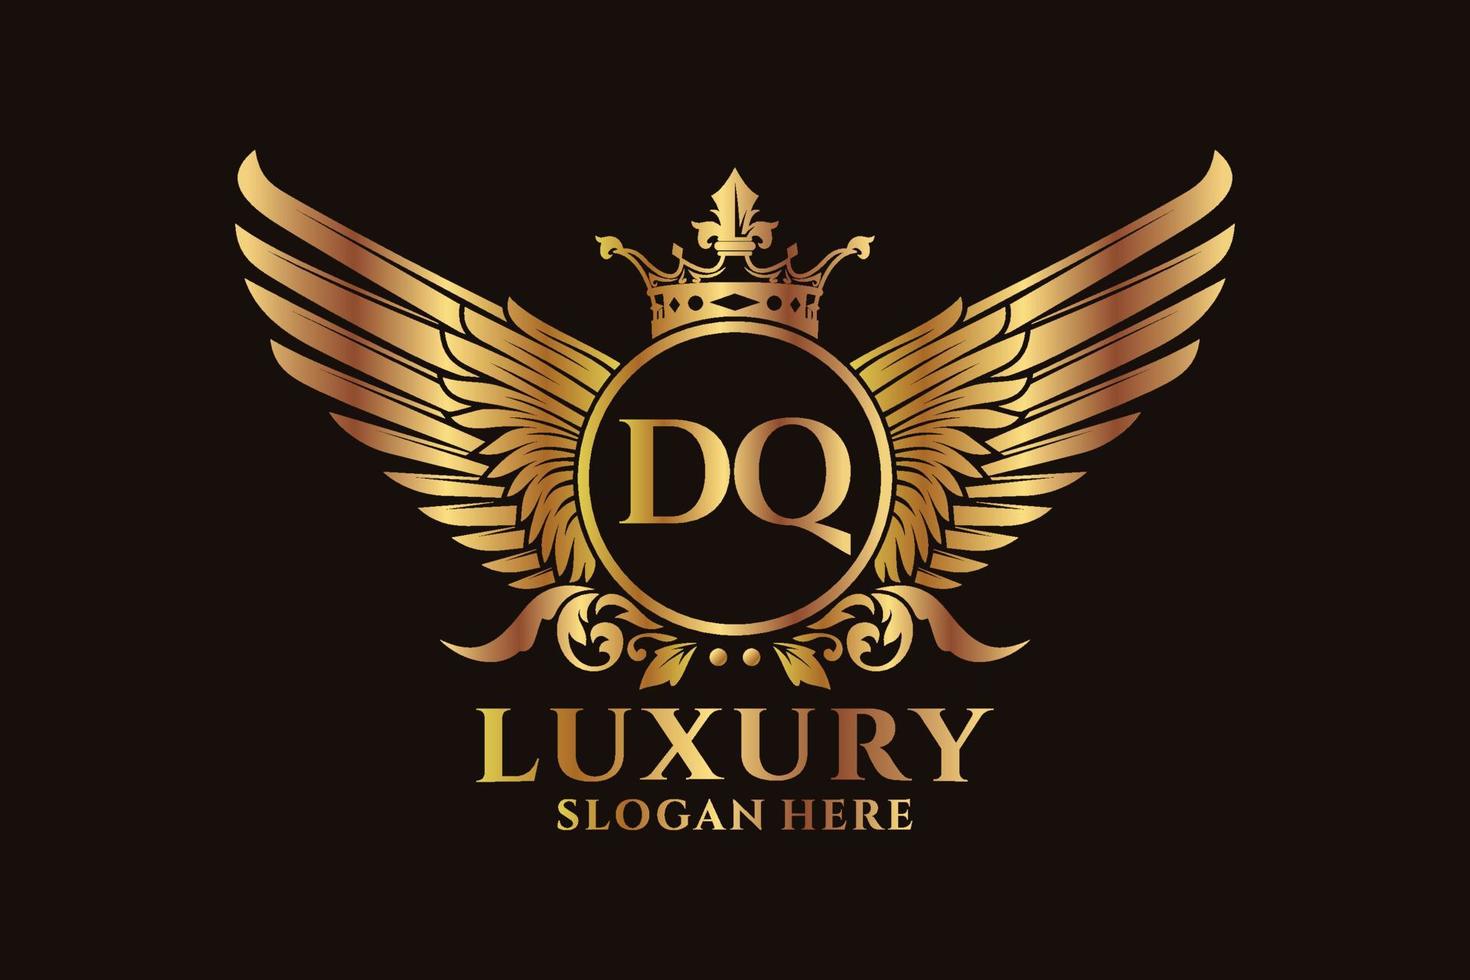 luxe Koninklijk vleugel brief dq kam goud kleur logo vector, zege logo, kam logo, vleugel logo, vector logo sjabloon.